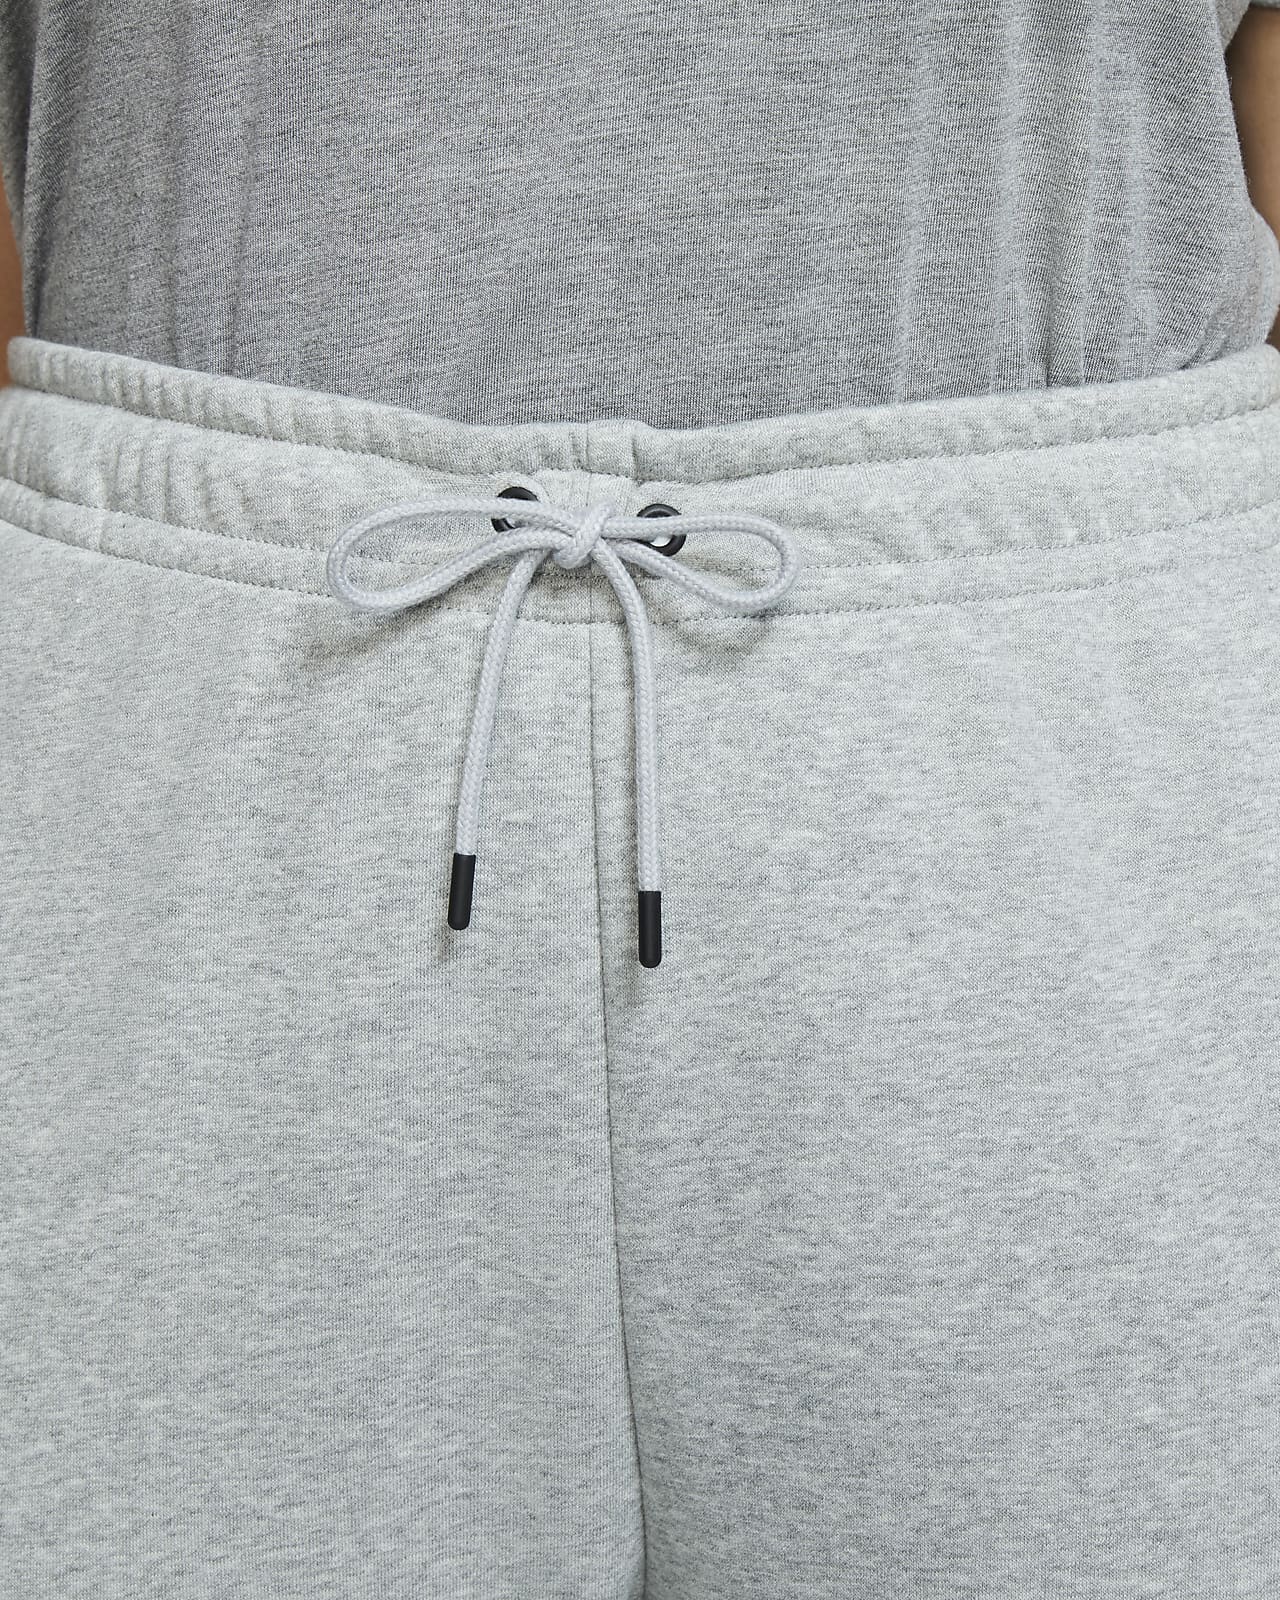 Nike Women's Fleece Pants (Plus Size). Nike.com